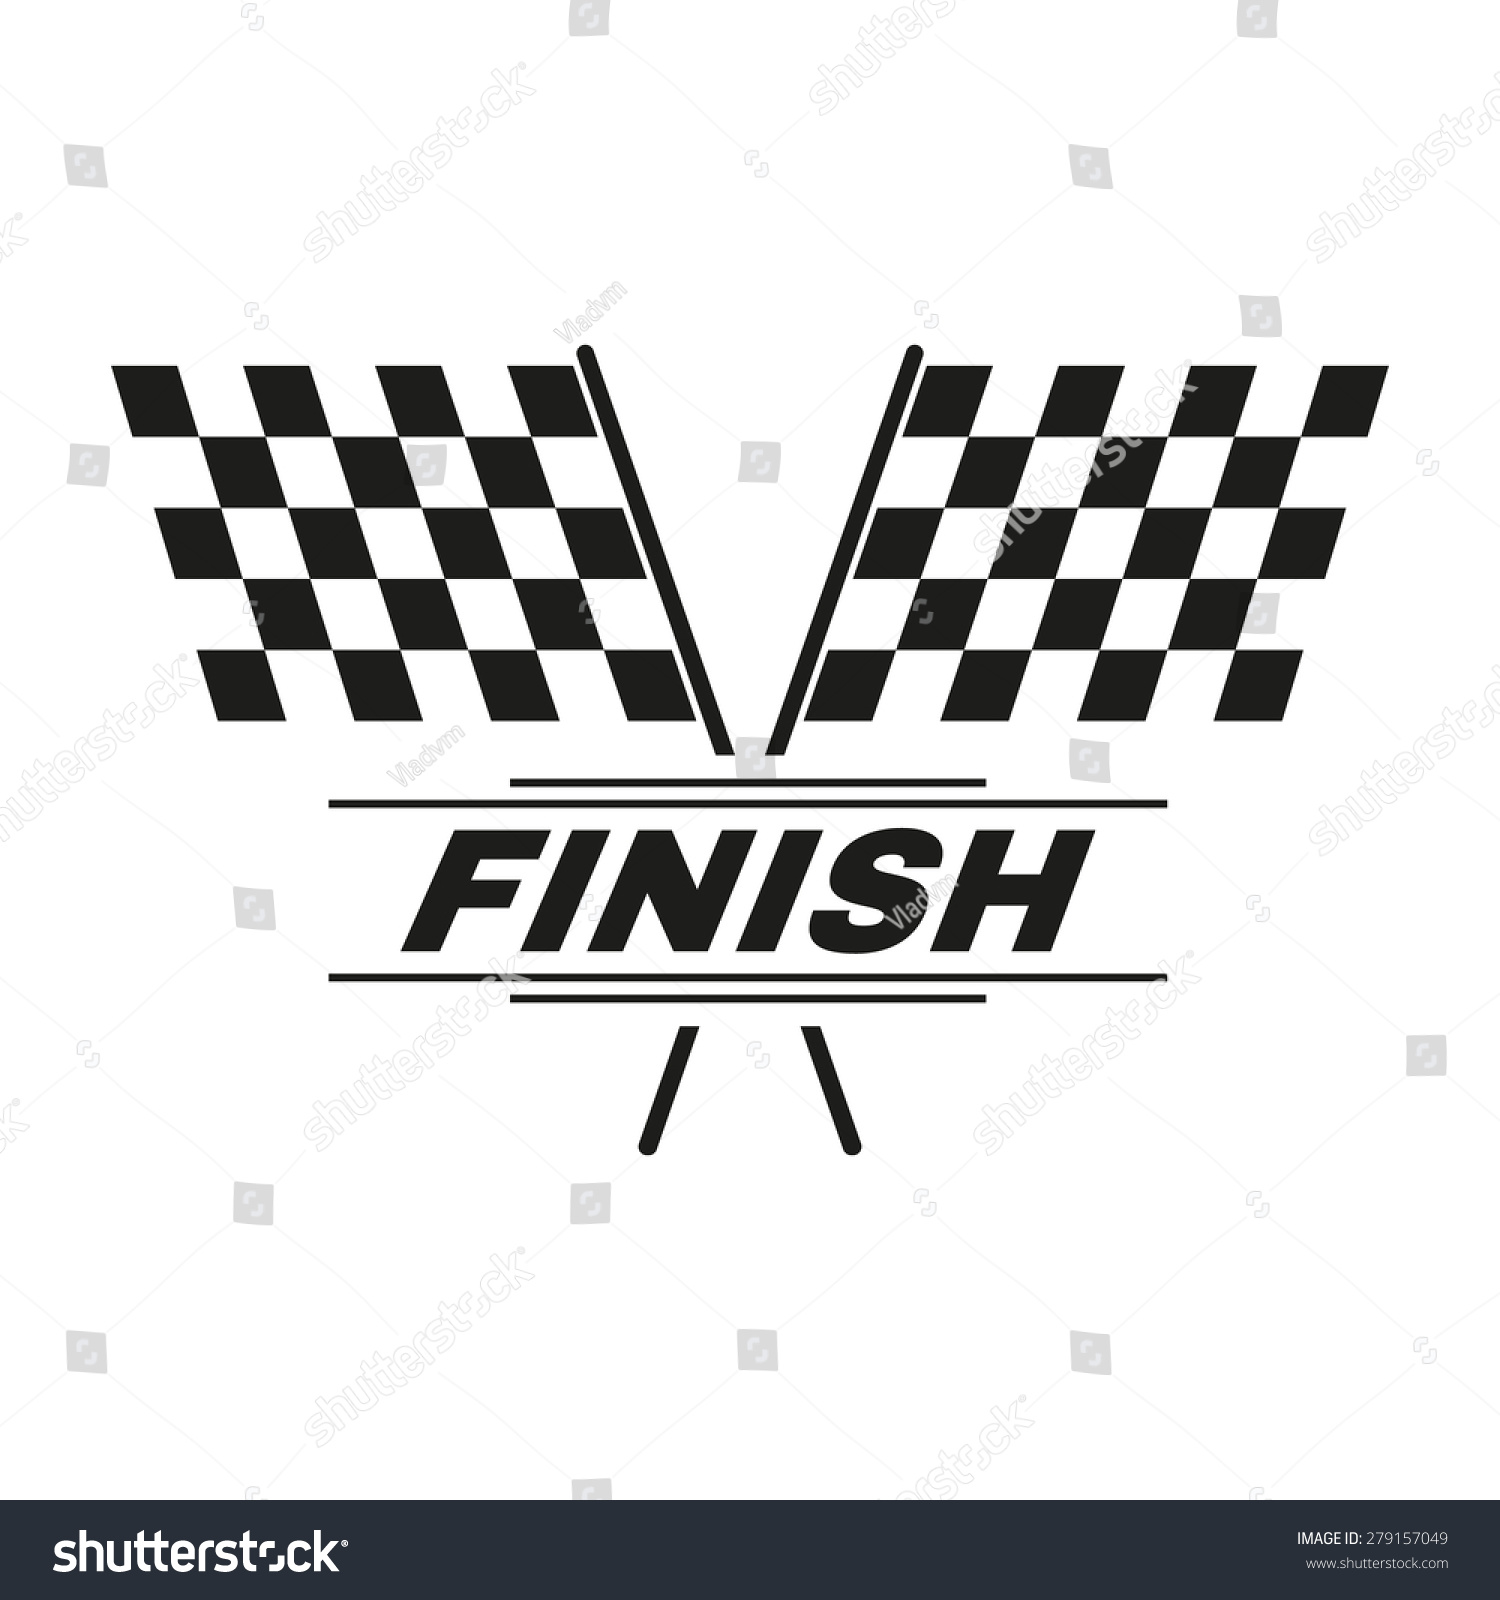 racing finish line clipart - photo #28